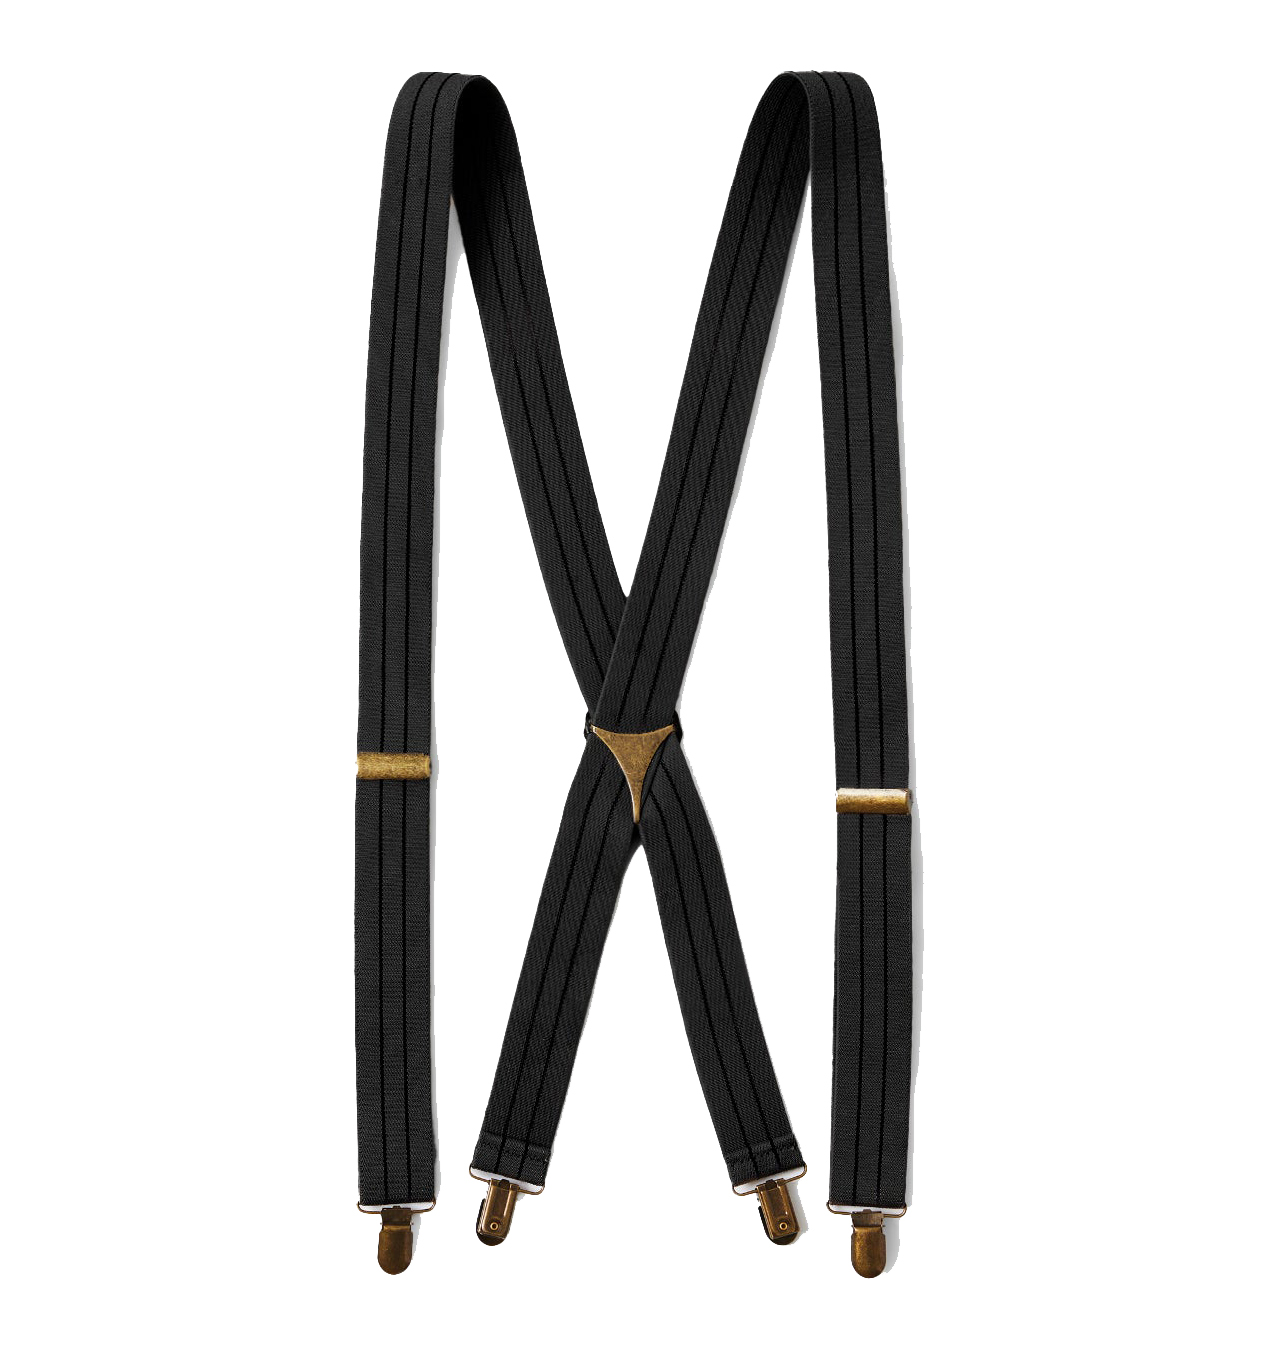 Brixton - Done Proper Suspenders - Black